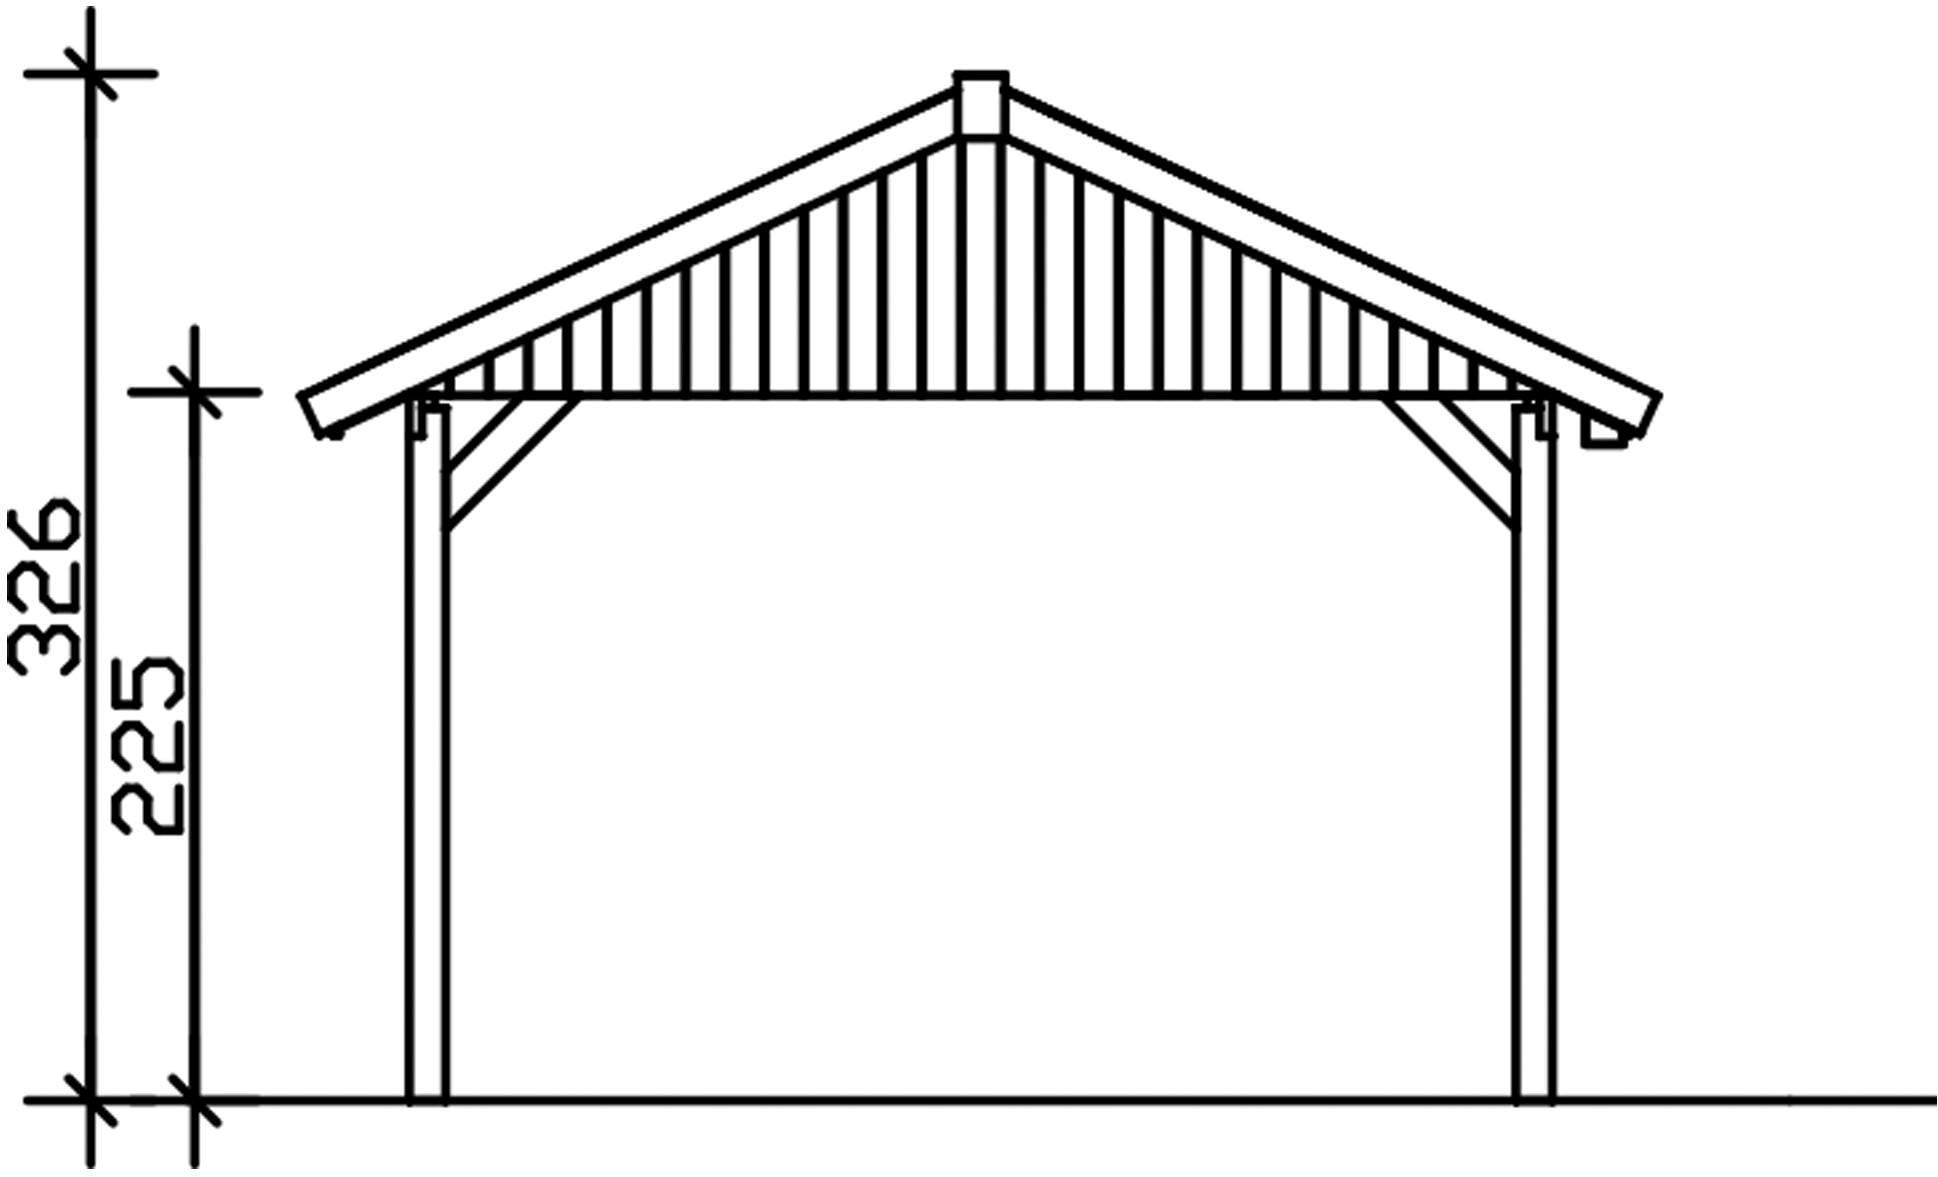 Skanholz Einzelcarport »Wallgau«, Nadelholz, 340 cm, Nussbaum, 430x500cm, mit Dachlattung